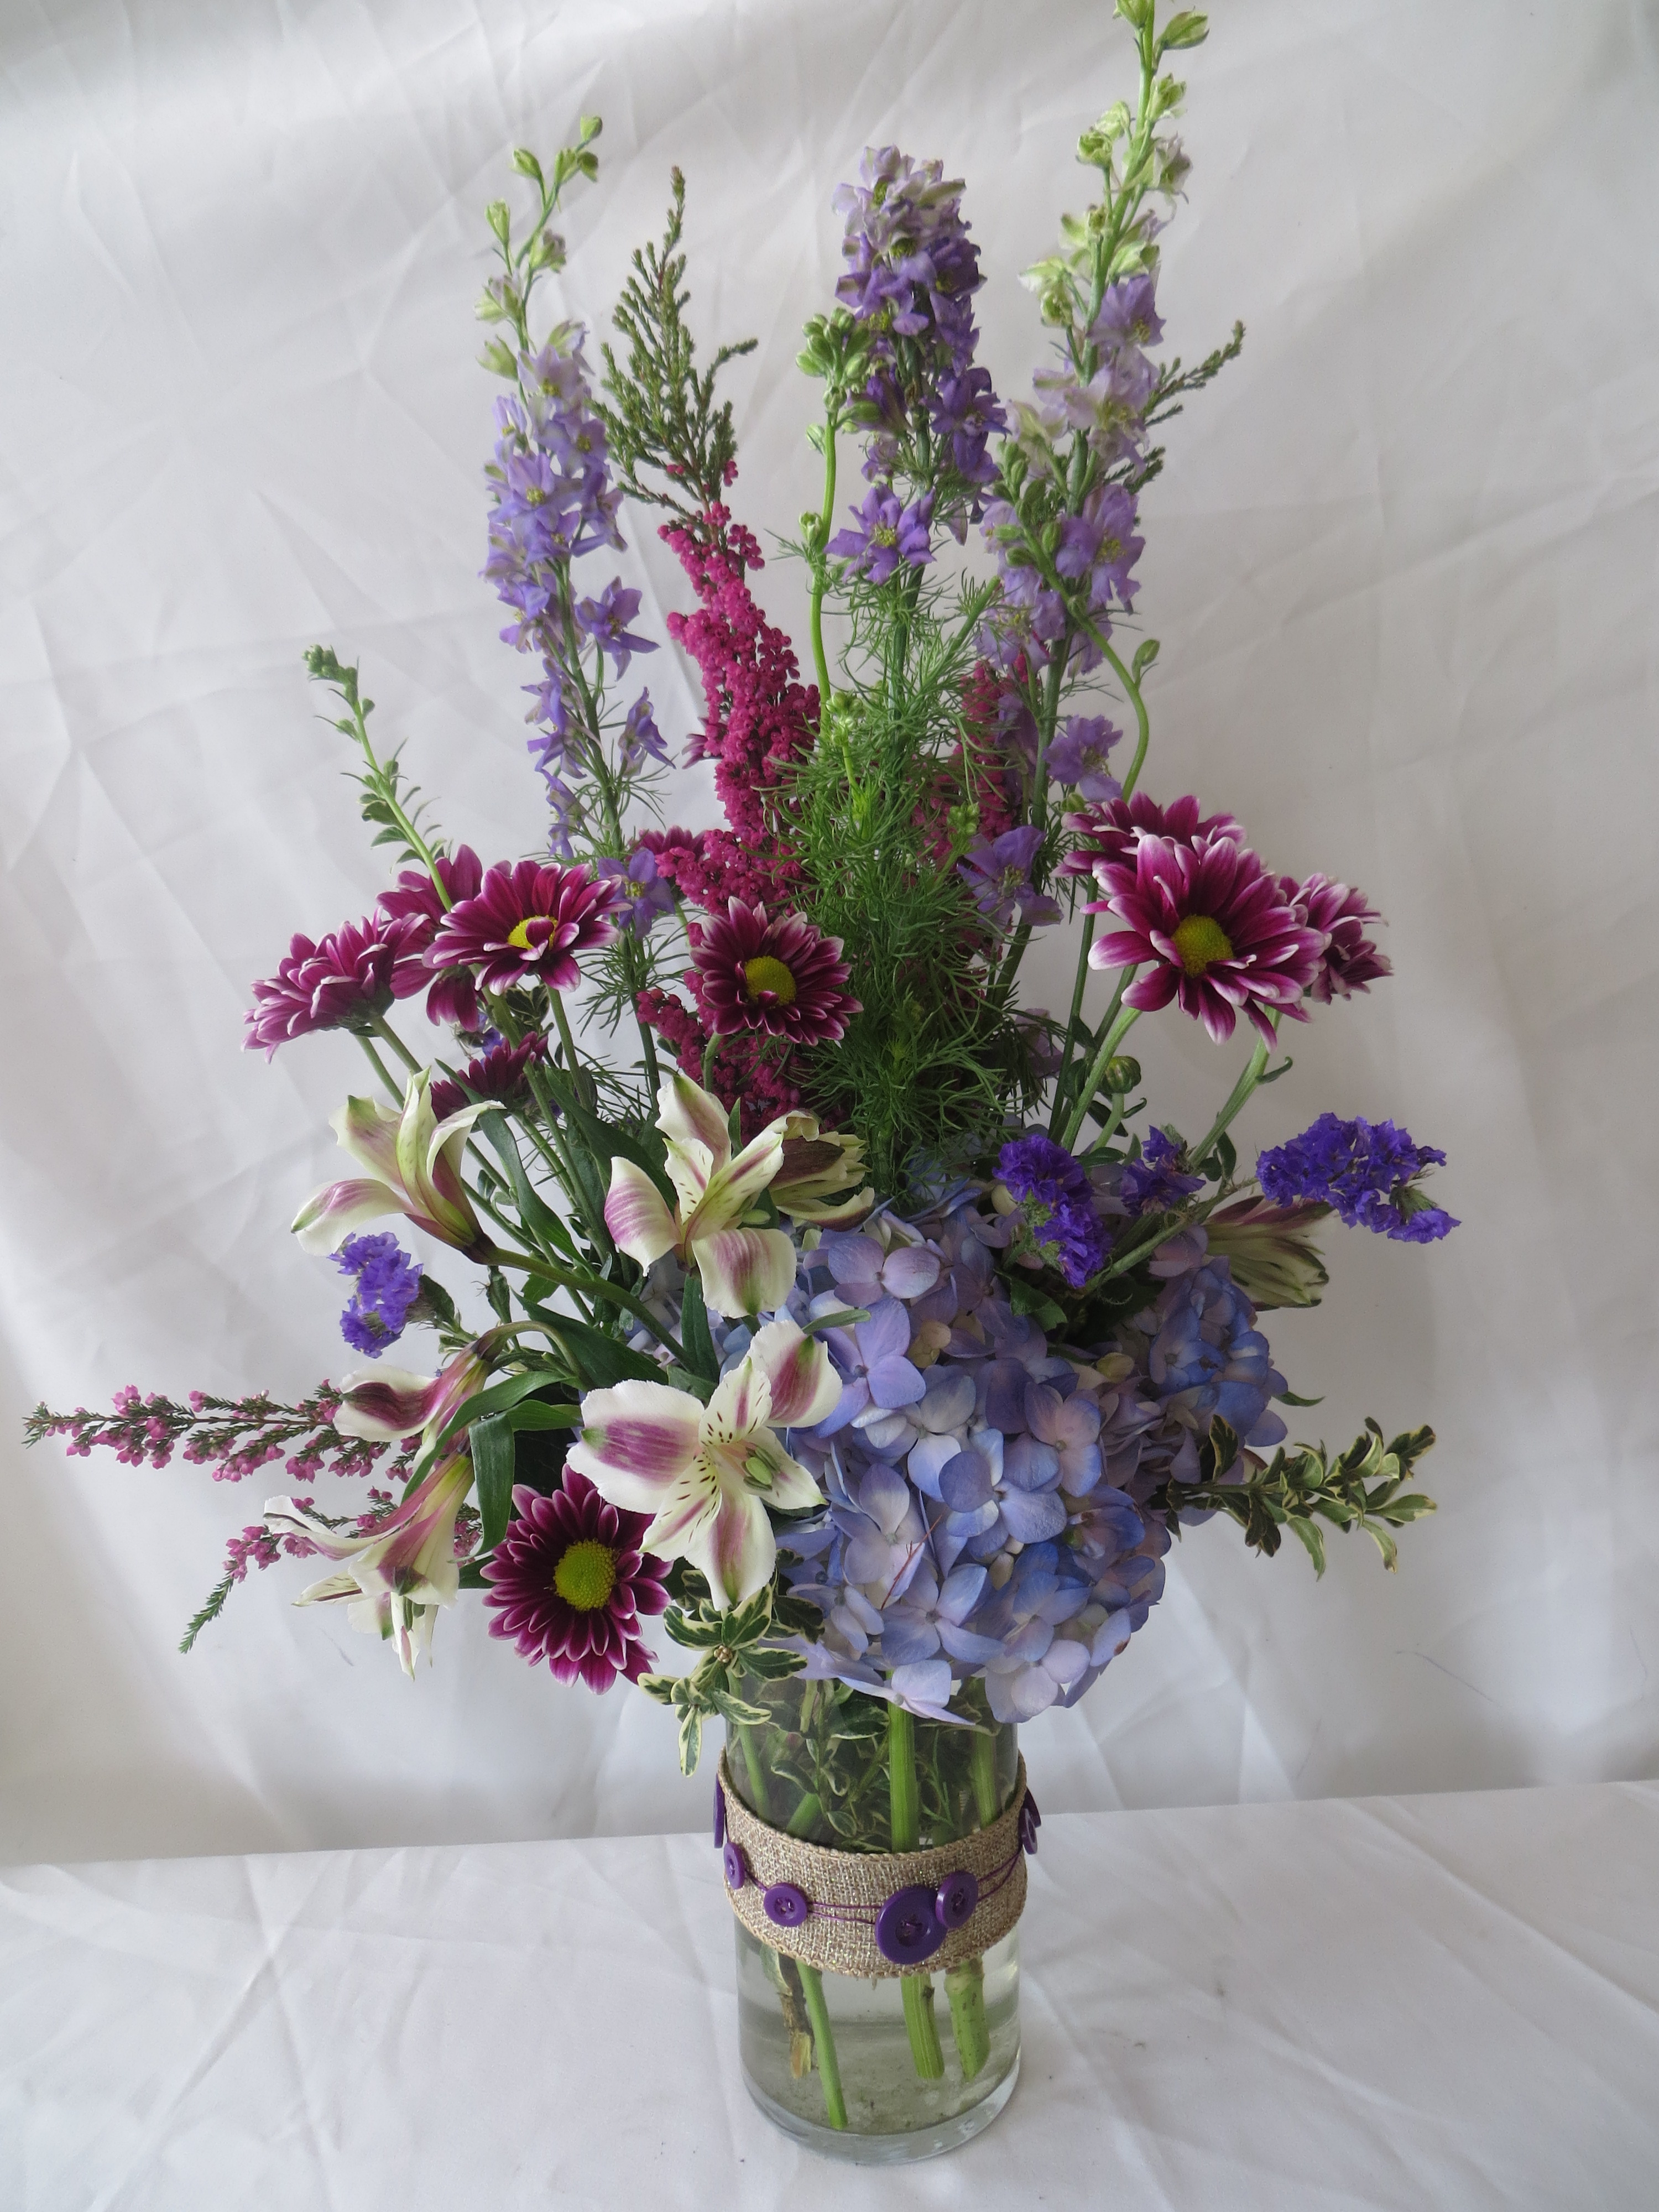 friendswood flowers shop florist texas tx delivery purple flowers